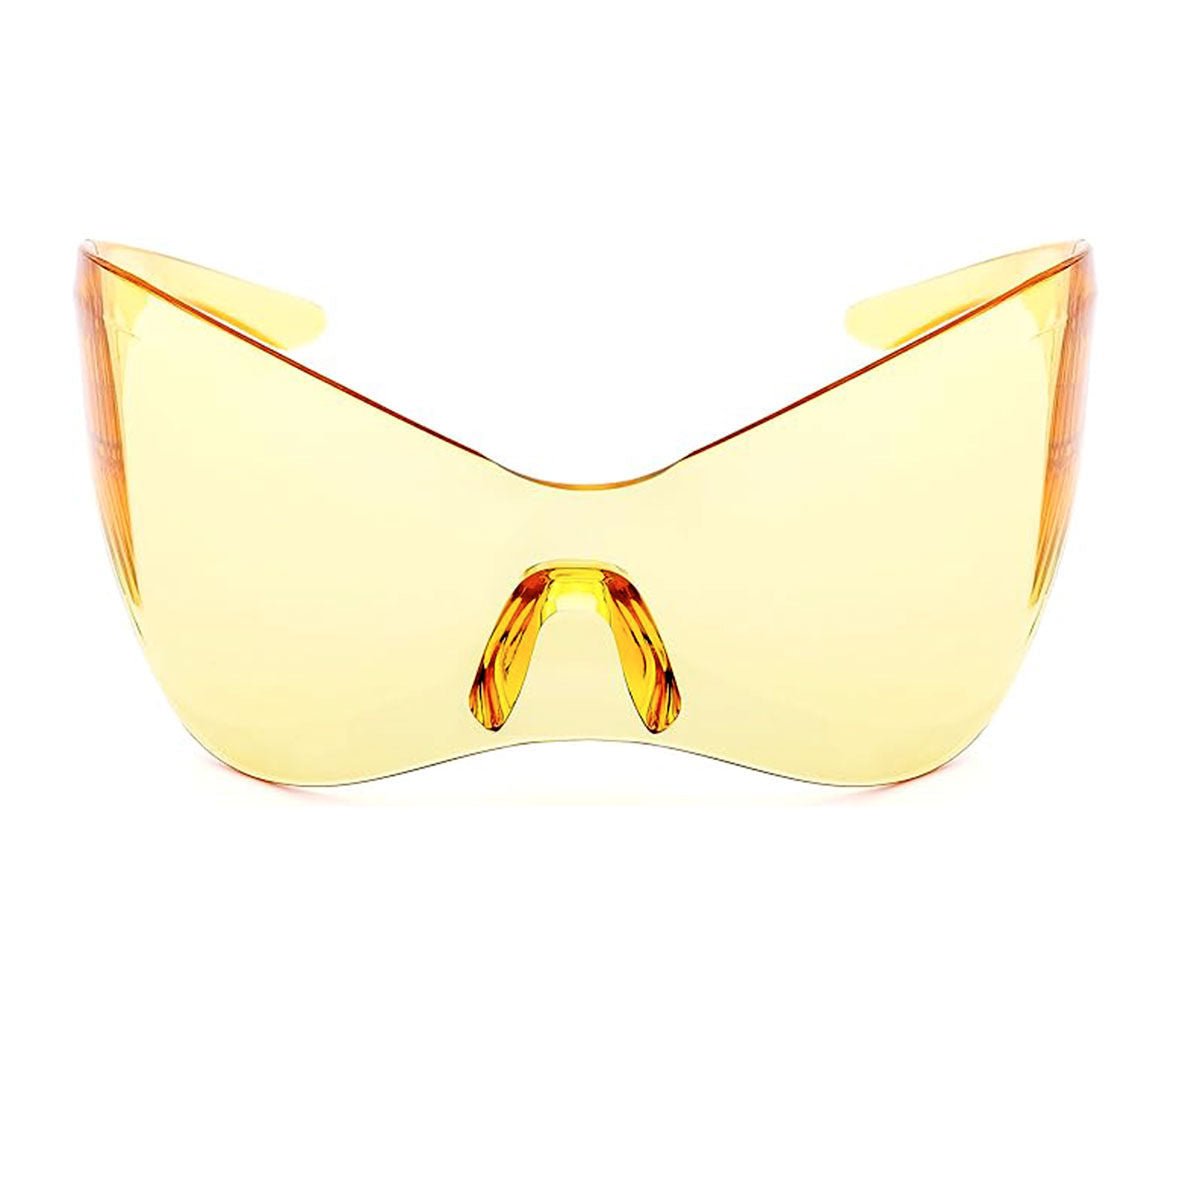 Sunglasses Mask Wrap Yellow Eyewear for Women - Bae Apparel